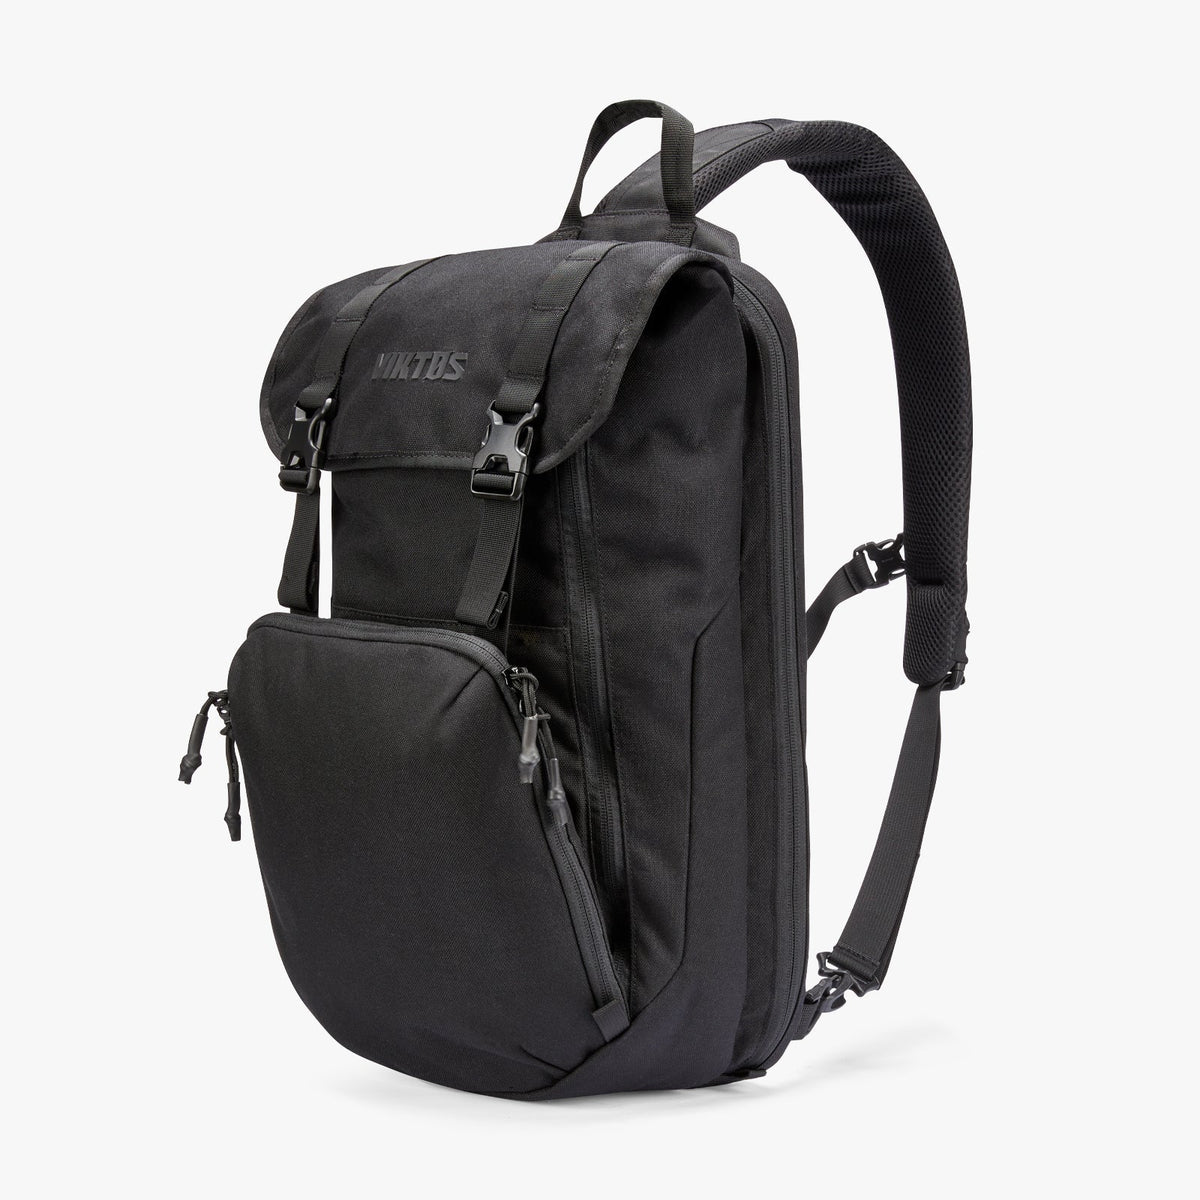 VIKTOS Forthright Sling Bag Black Bags, Packs and Cases VIKTOS Tactical Gear Supplier Tactical Distributors Australia